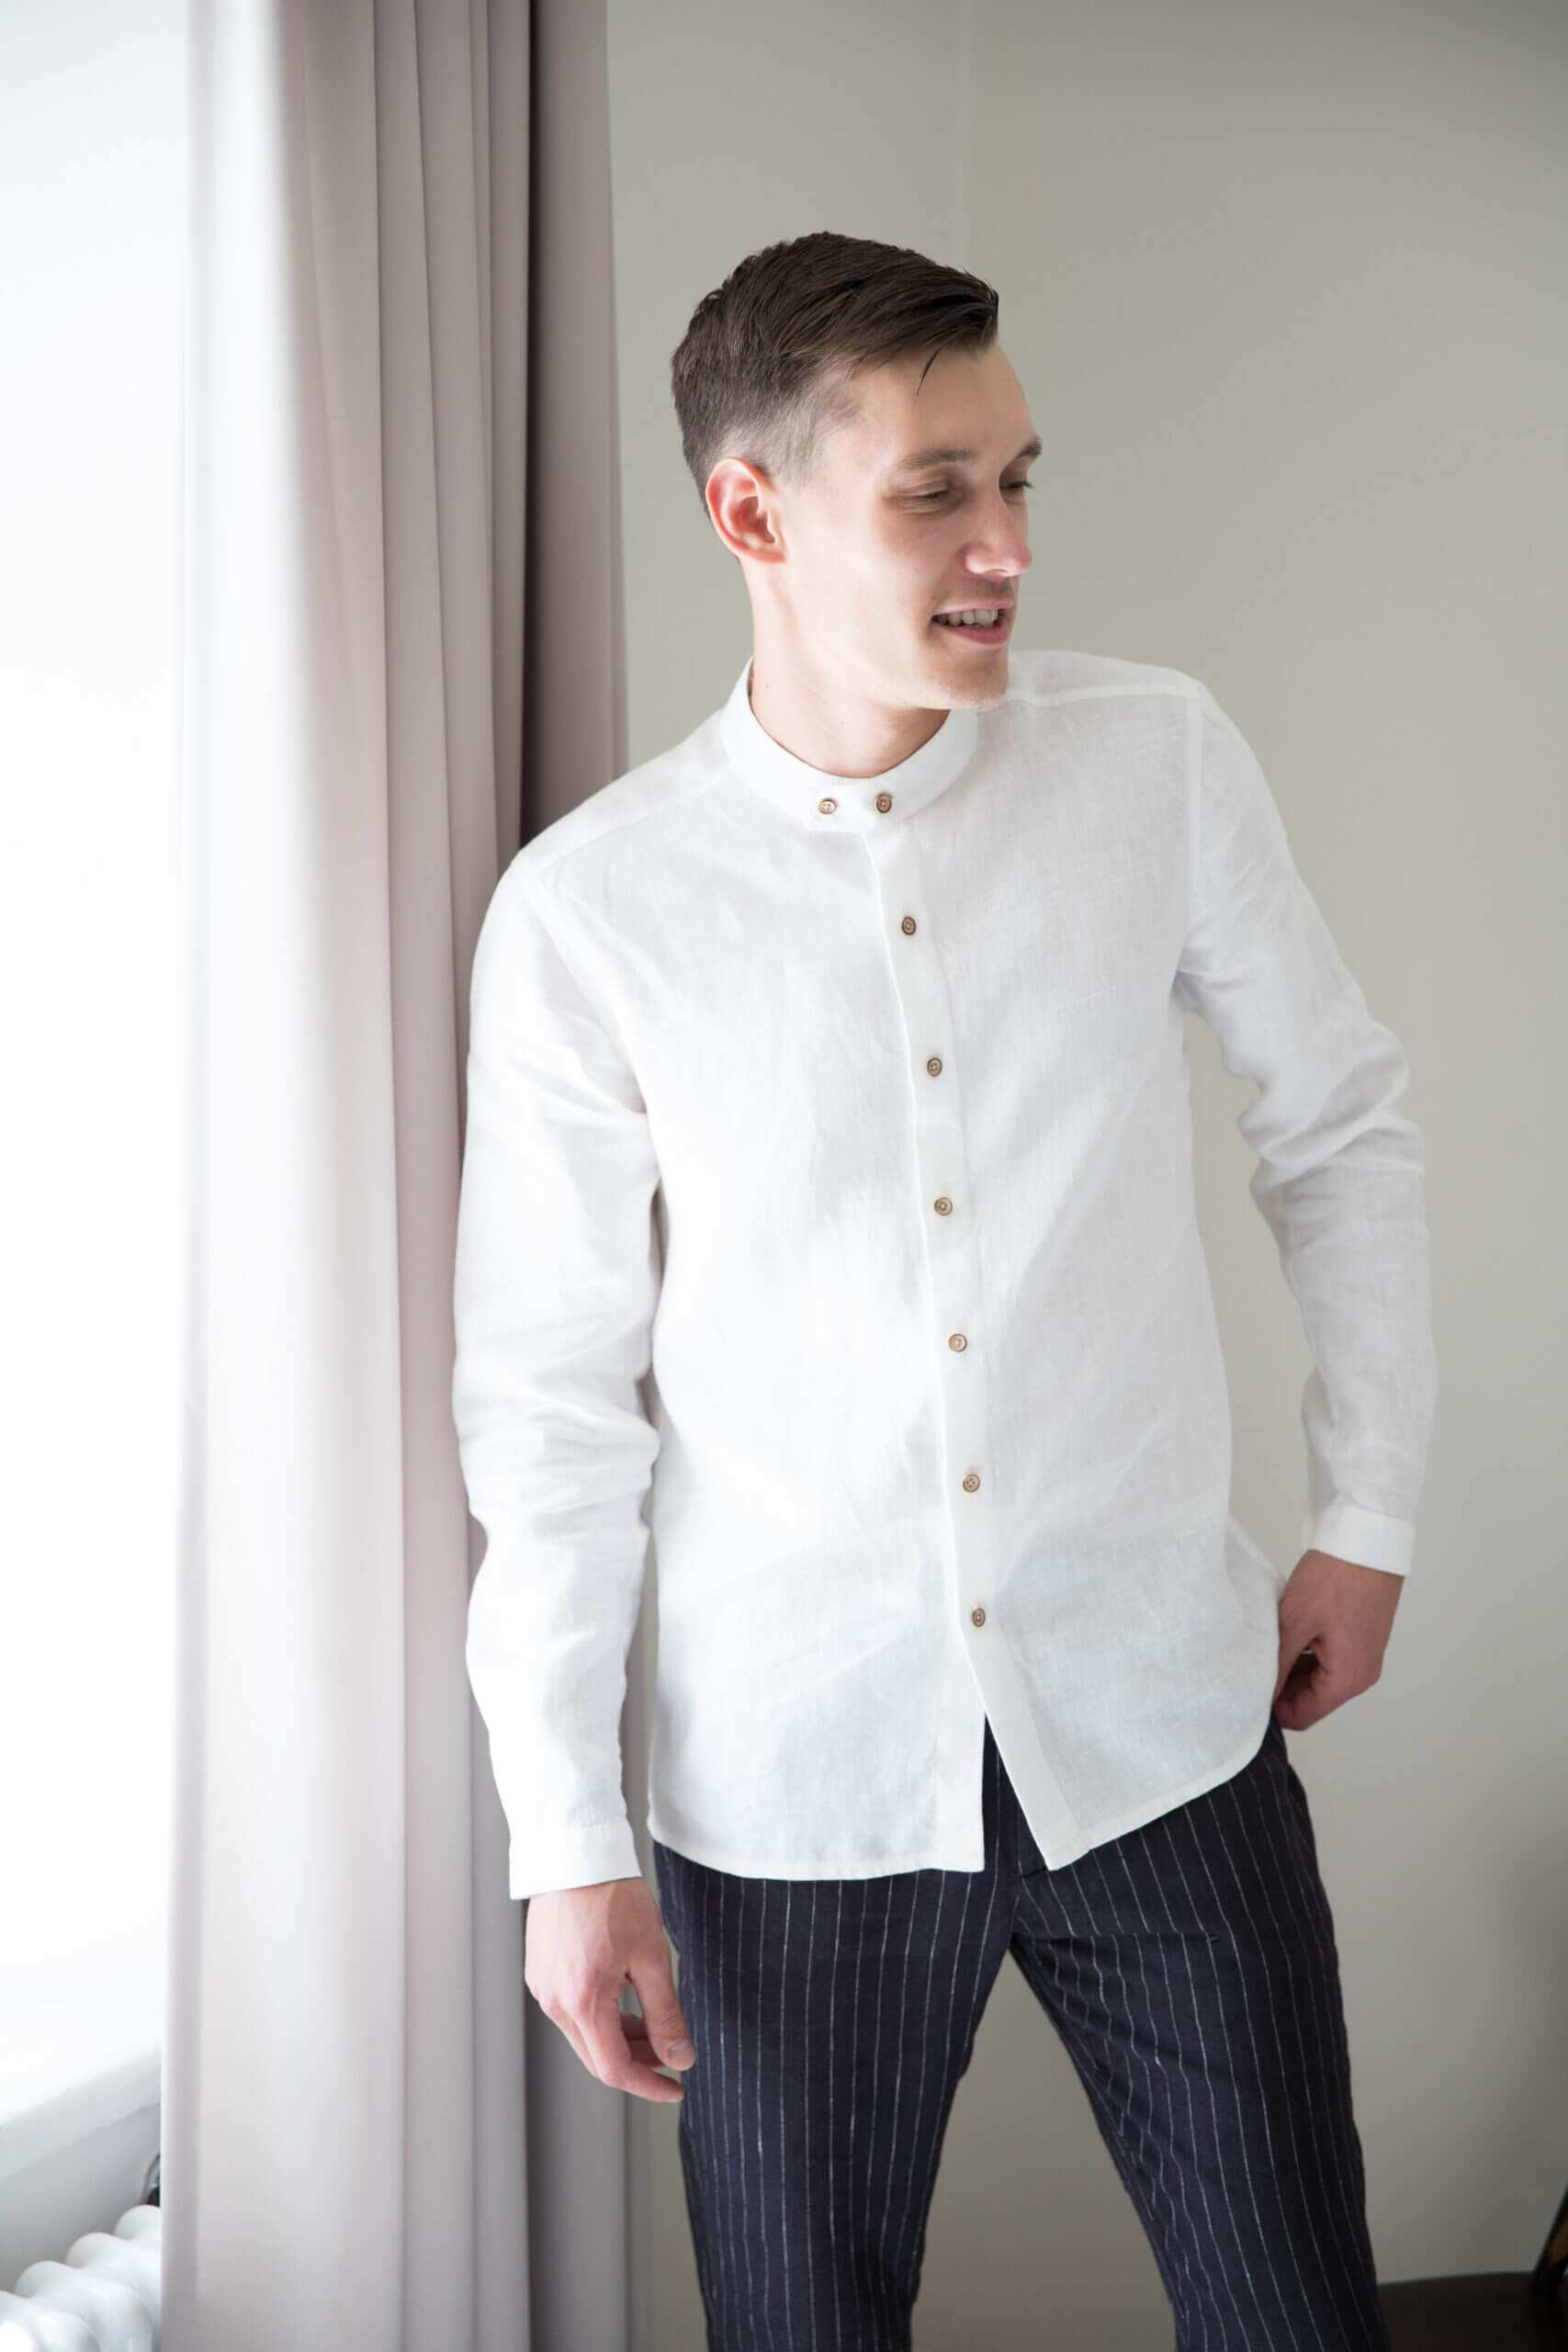 White linen shirt paired elegantly with capri pants